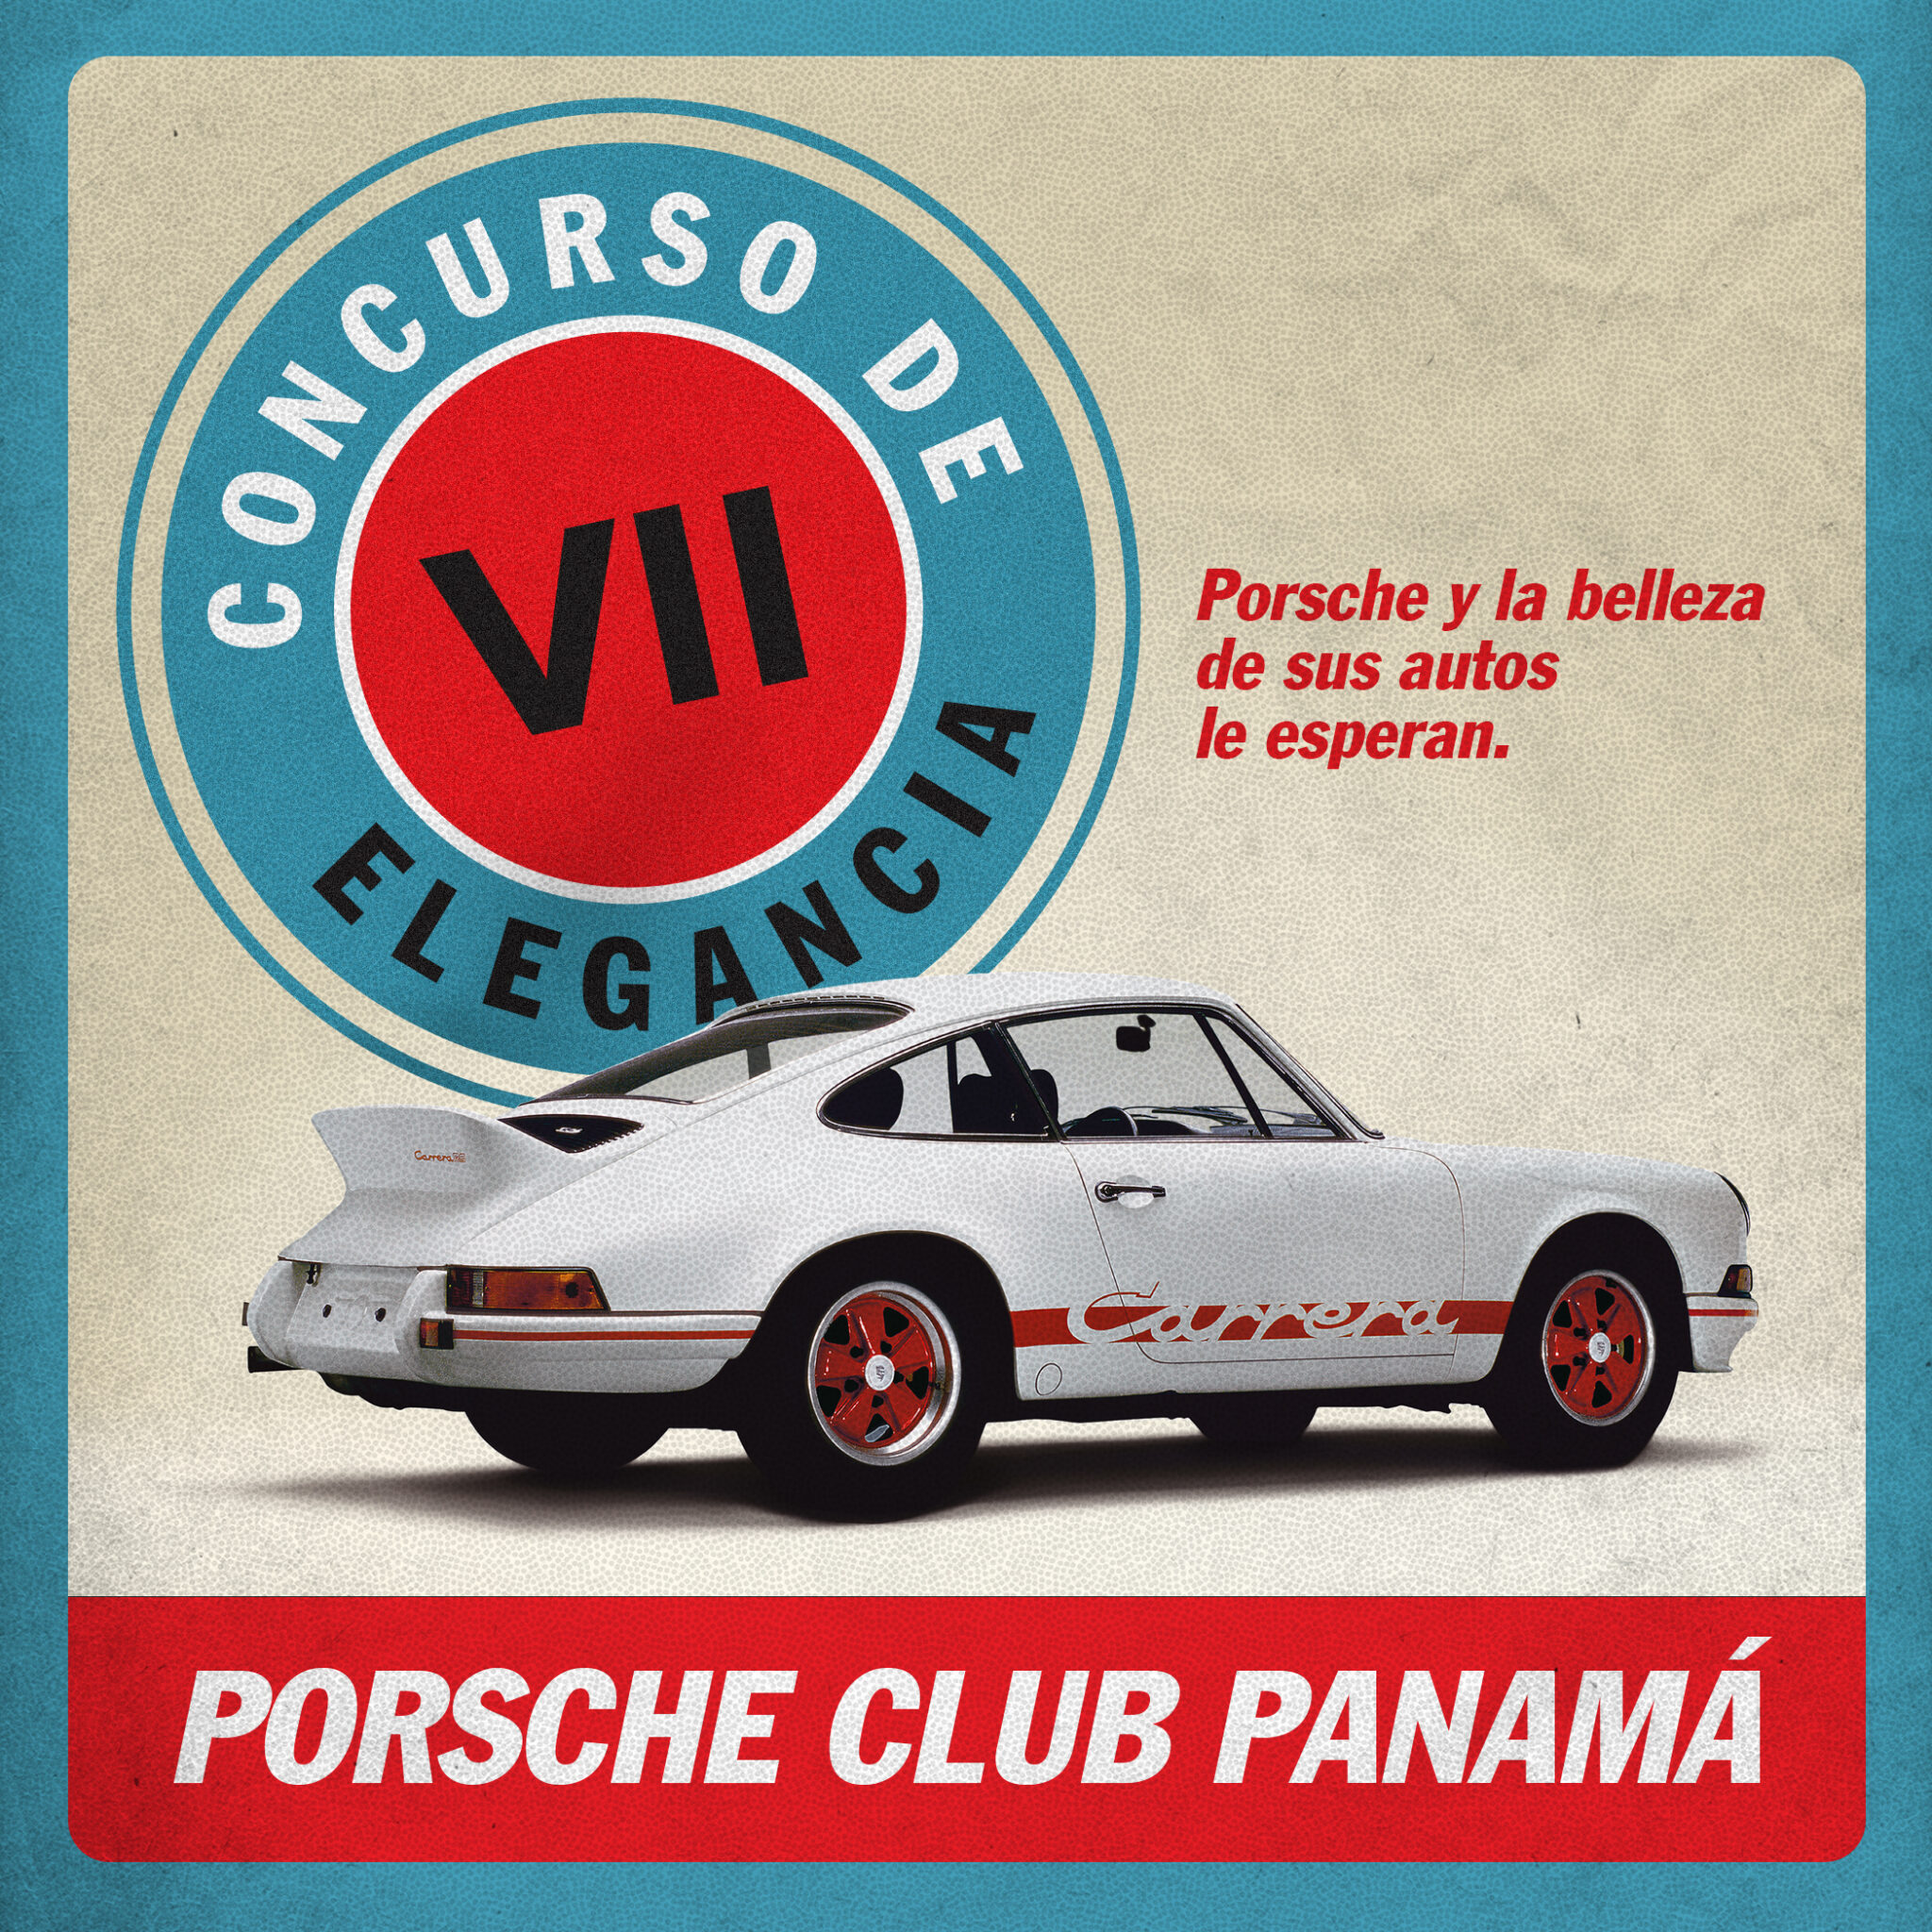 Porsche Club Panama Design